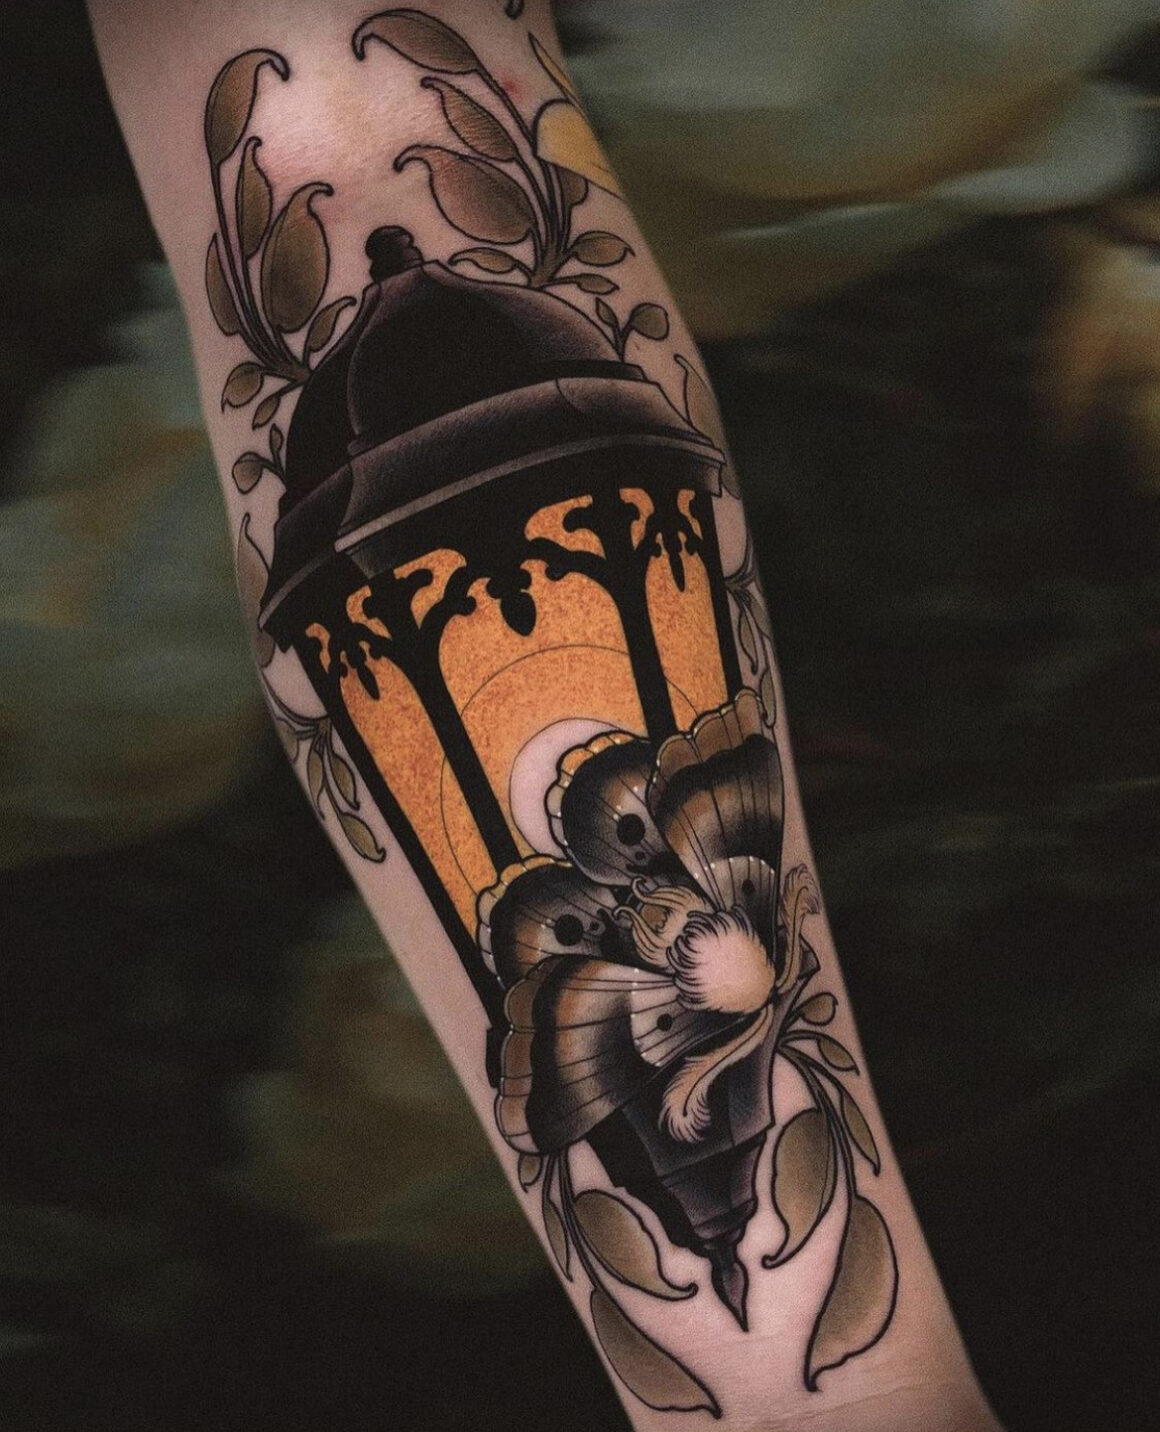 Cool vintage table lamp tattoo by Jeroen Van Dijk | Tatuaje de lámpara,  Tatuajes tradicionales